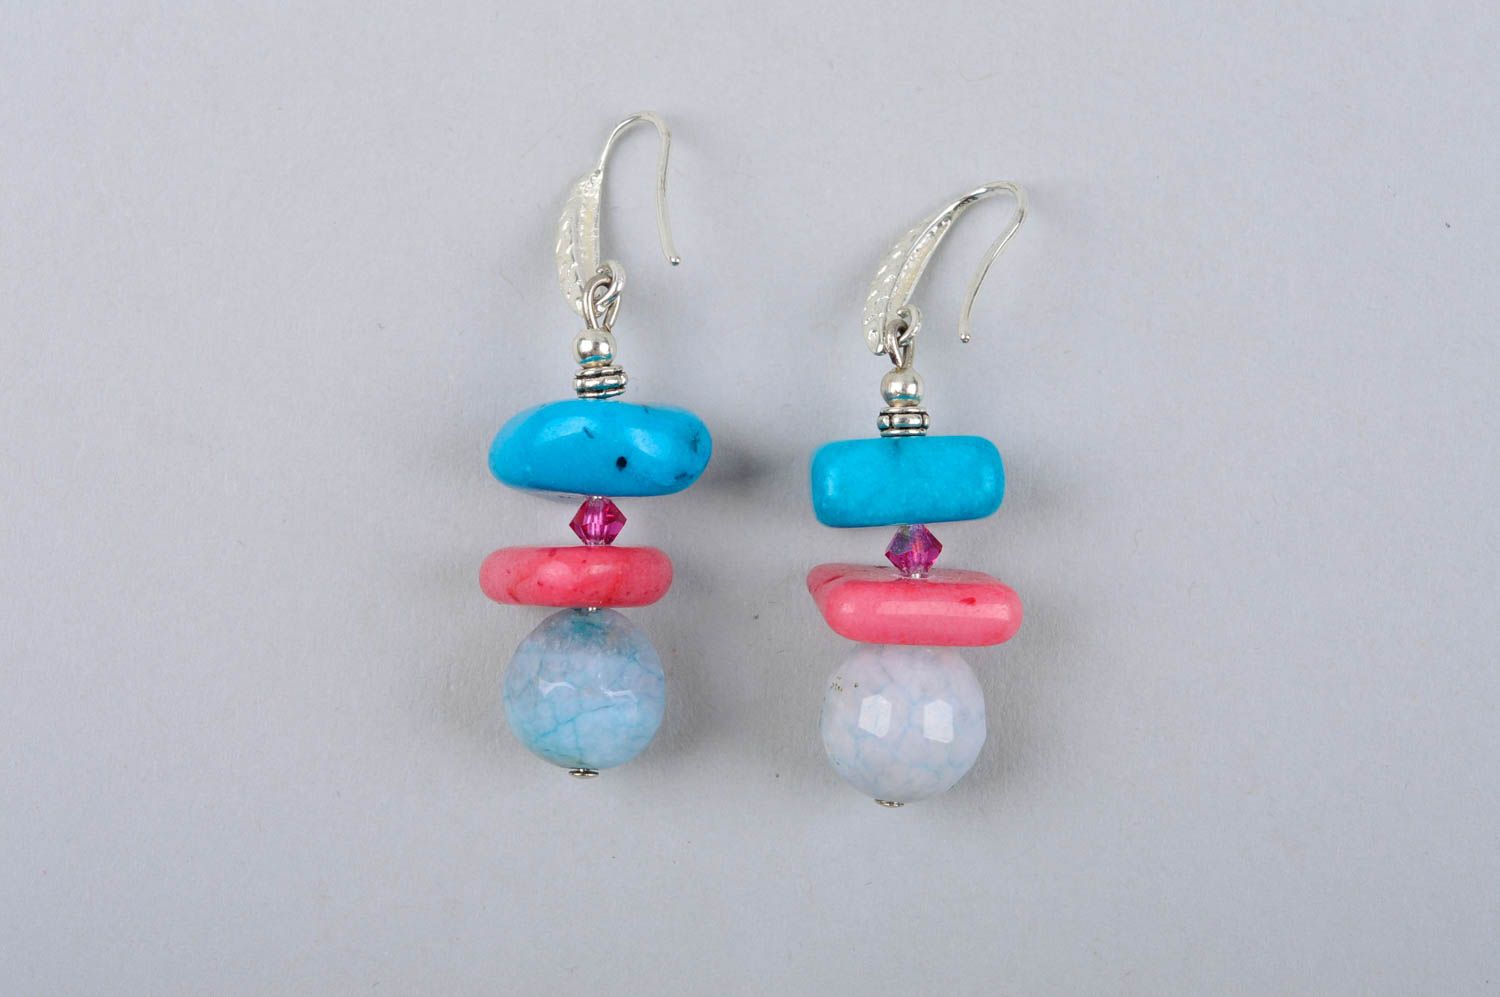 Handmade earrings with agate pendants designer women accessory idea for gift photo 3